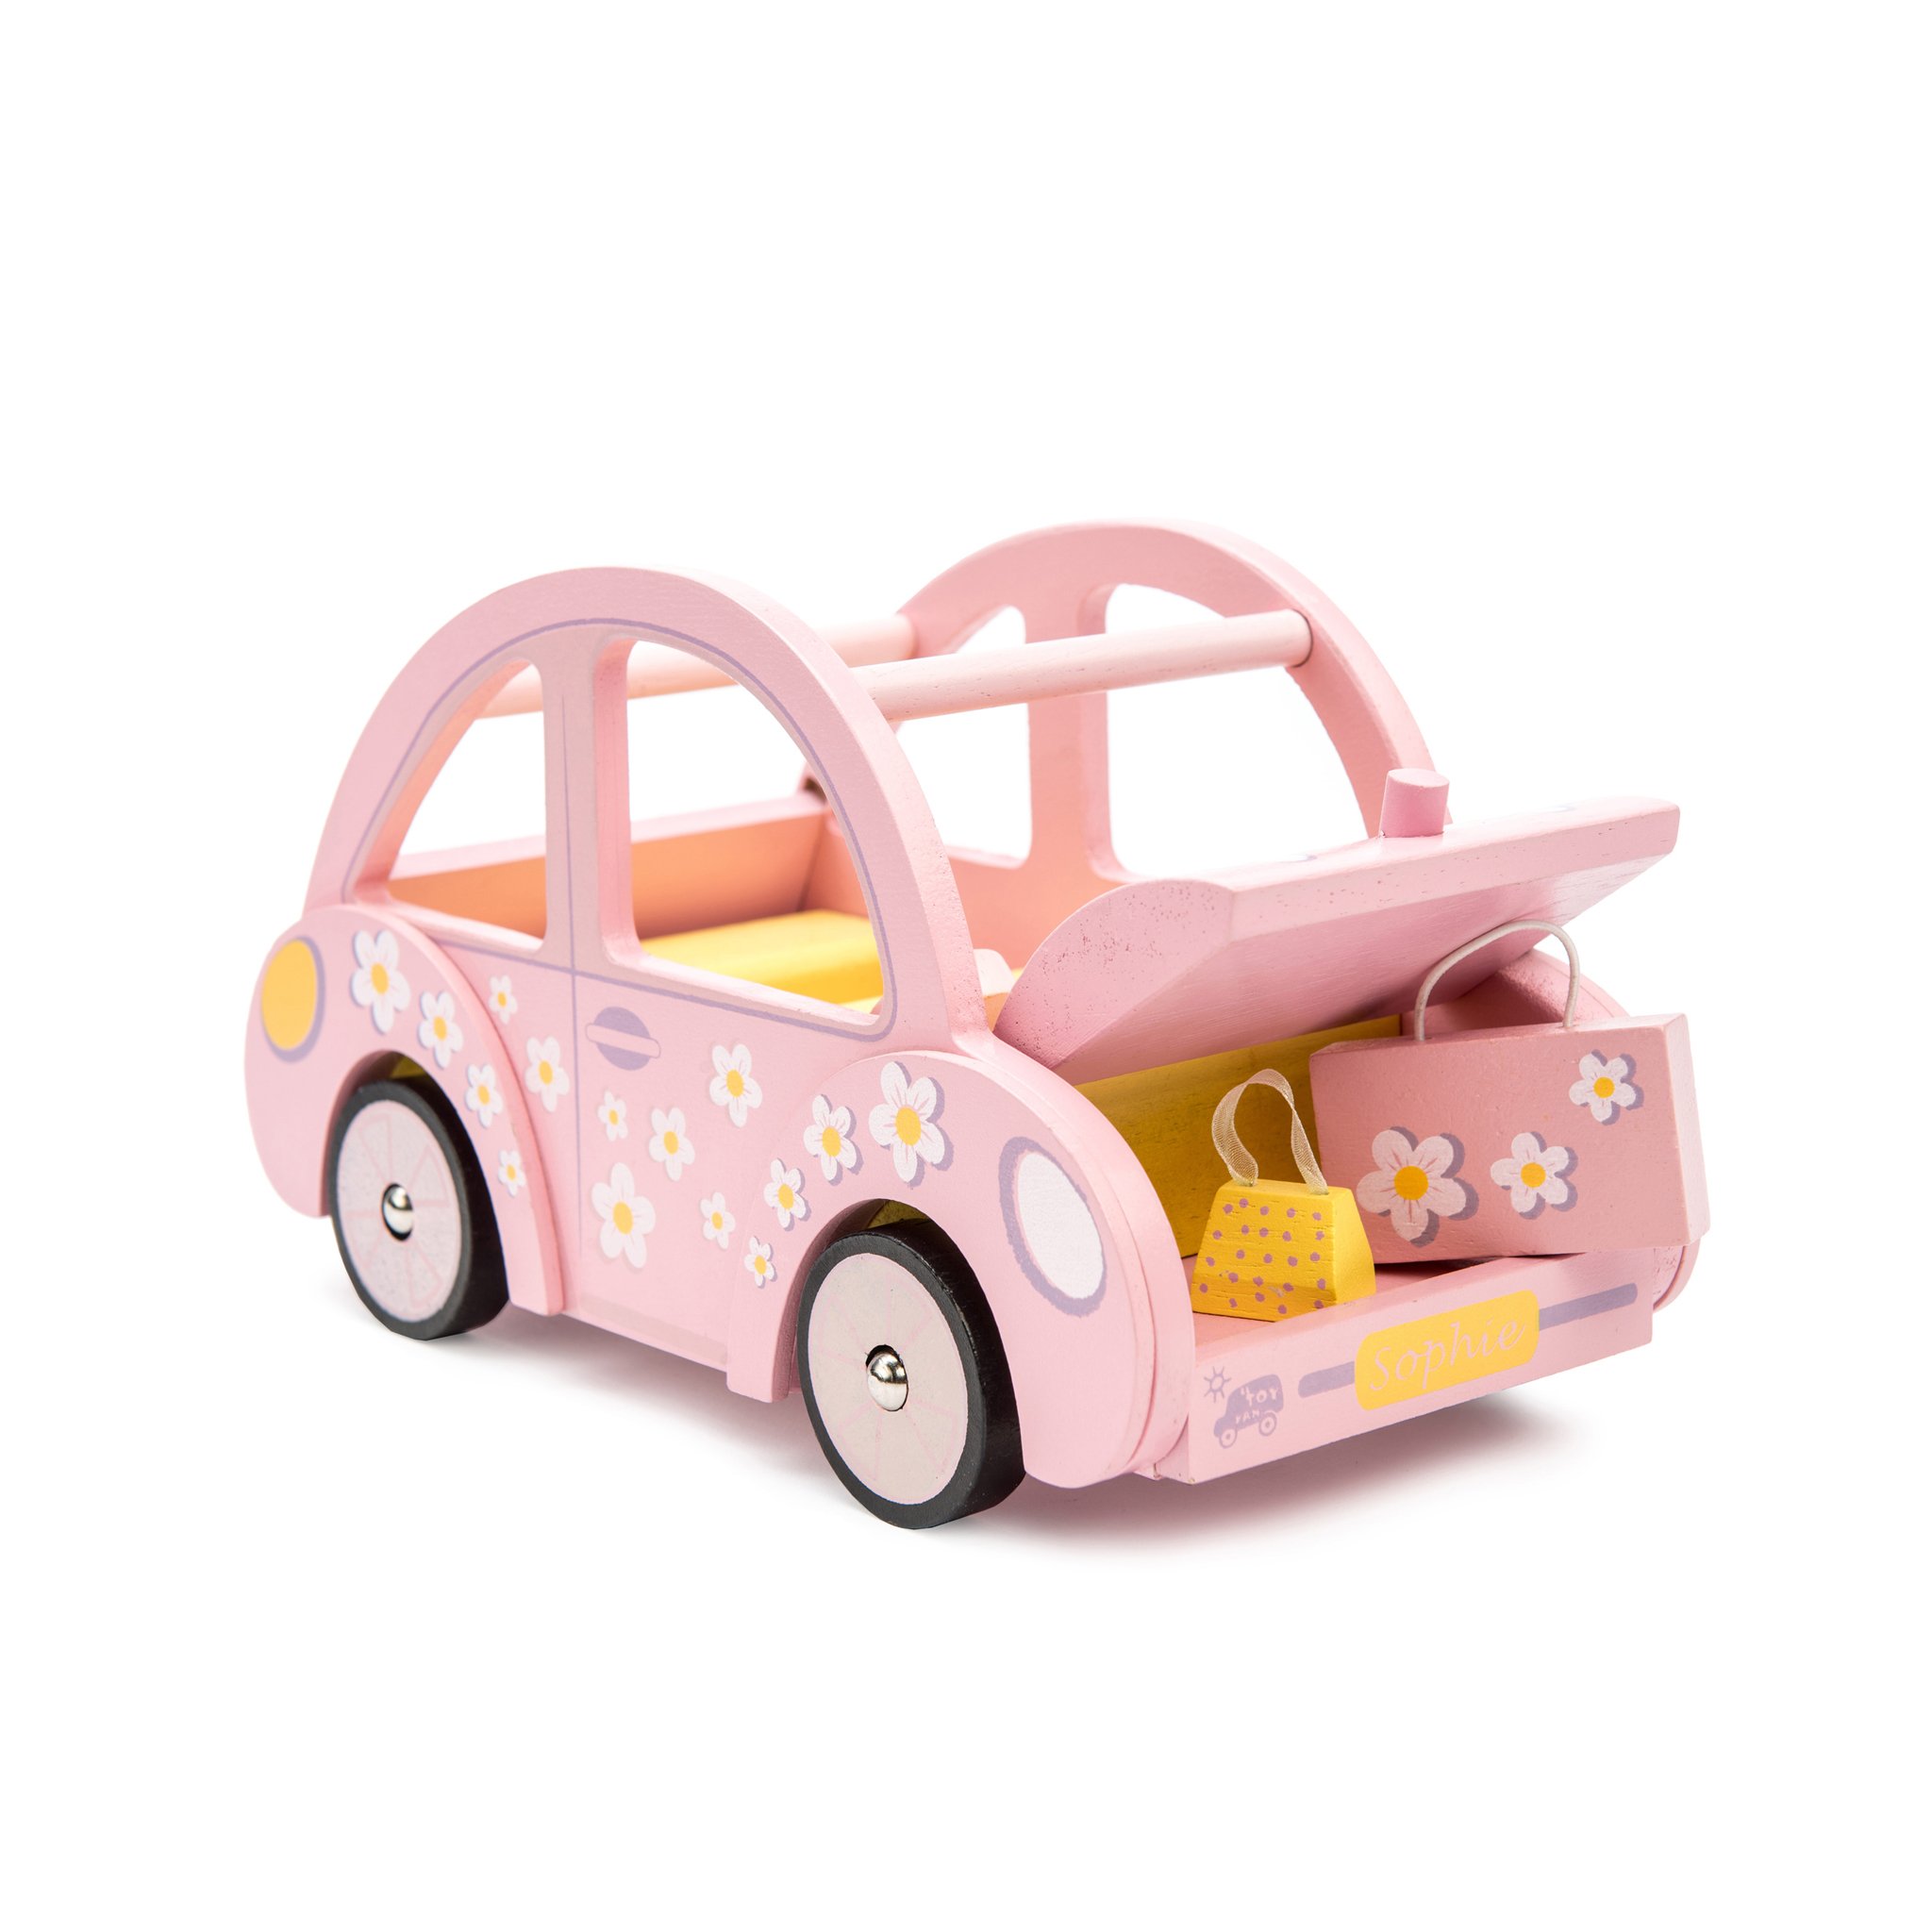 Sophie's Pretty Pink Wooden Car FX6948